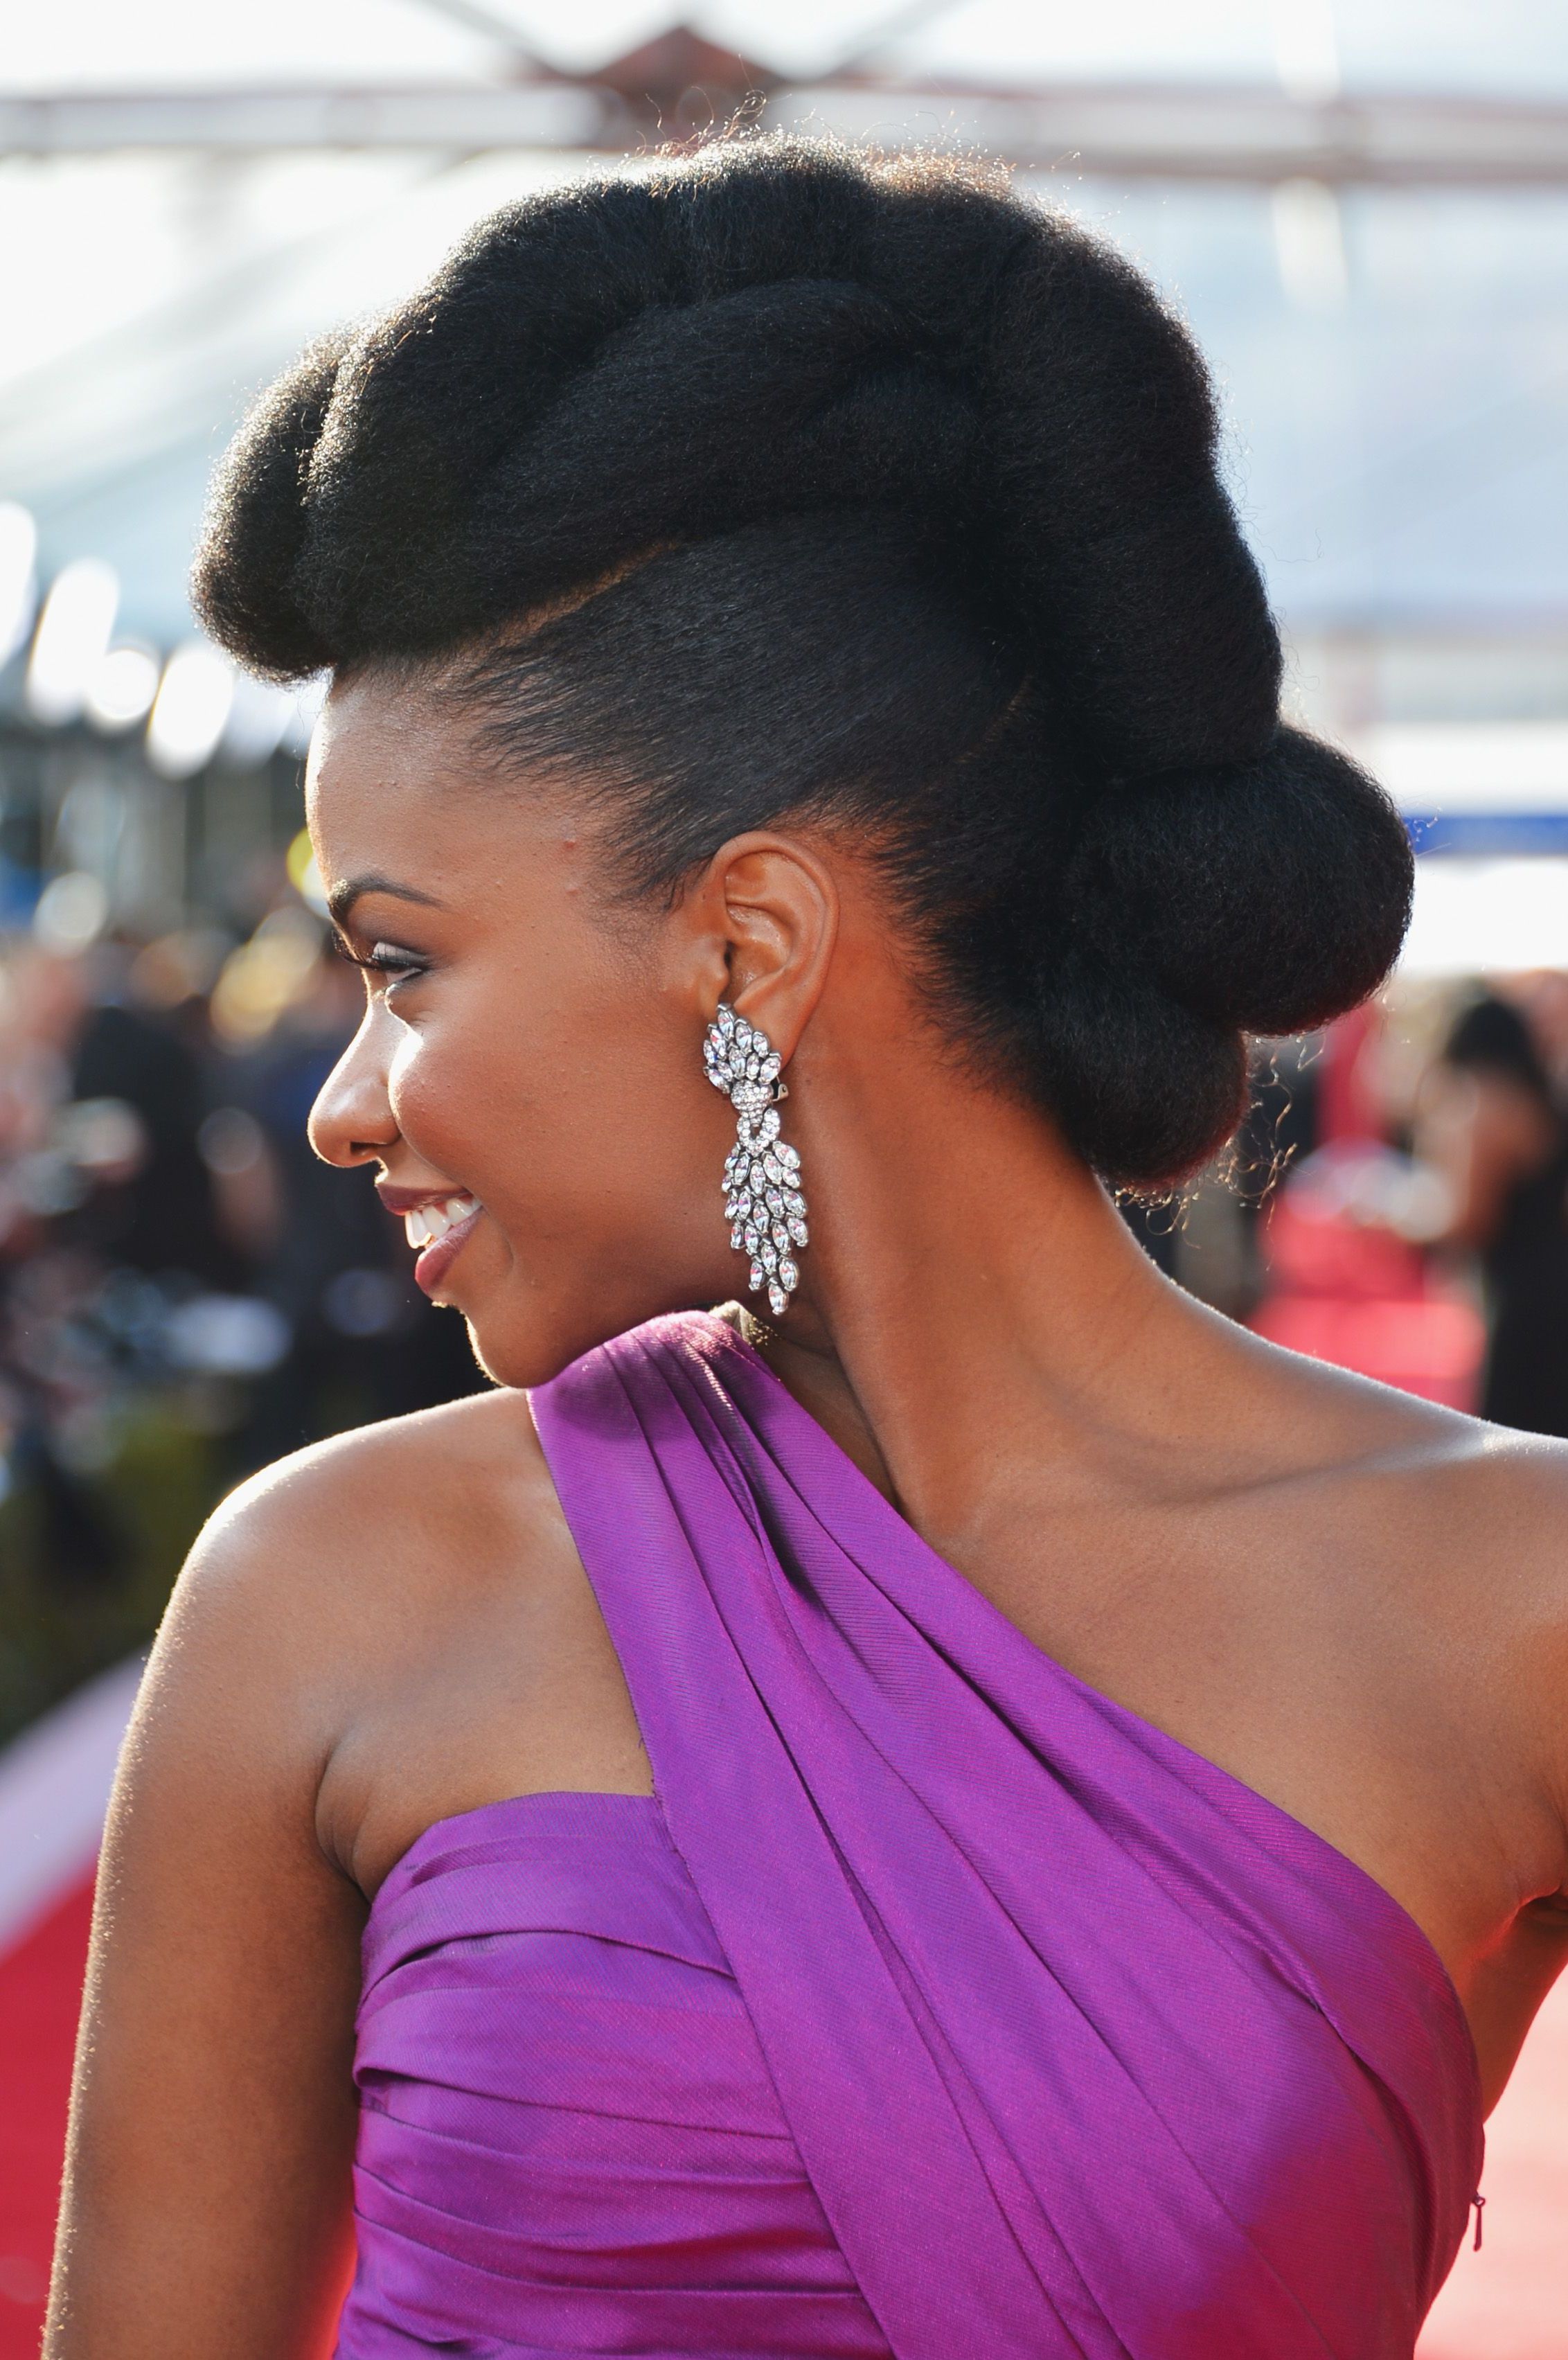 Preferred Medium Hairstyles Black Women With Regard To 30 Easy Natural Hairstyles For Black Women – Short, Medium & Long (Gallery 20 of 20)